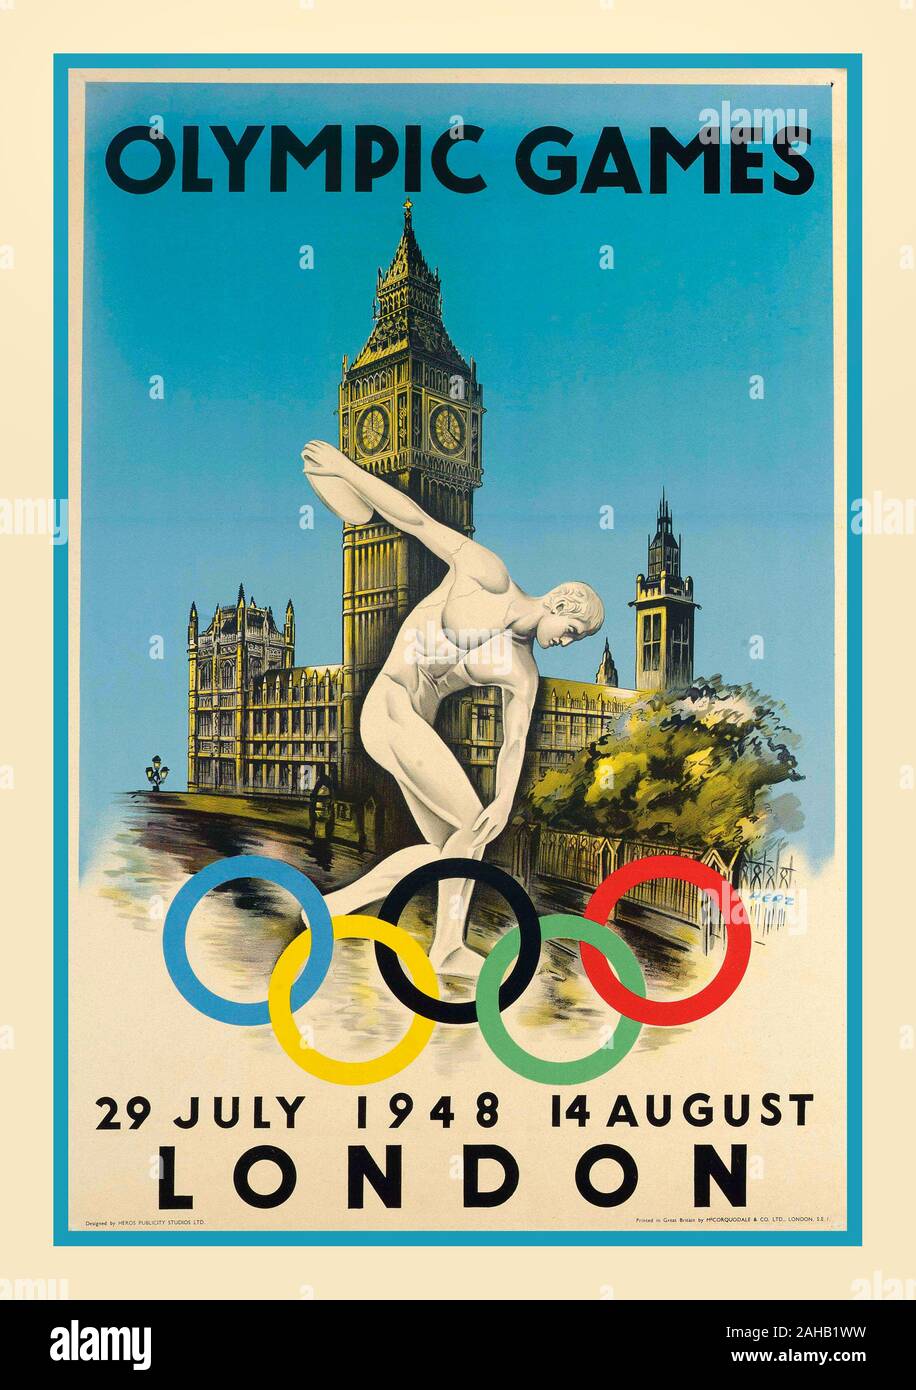 Interior Design Fine Graphic Art Olympics Games London 1948 Decor Poster 2567